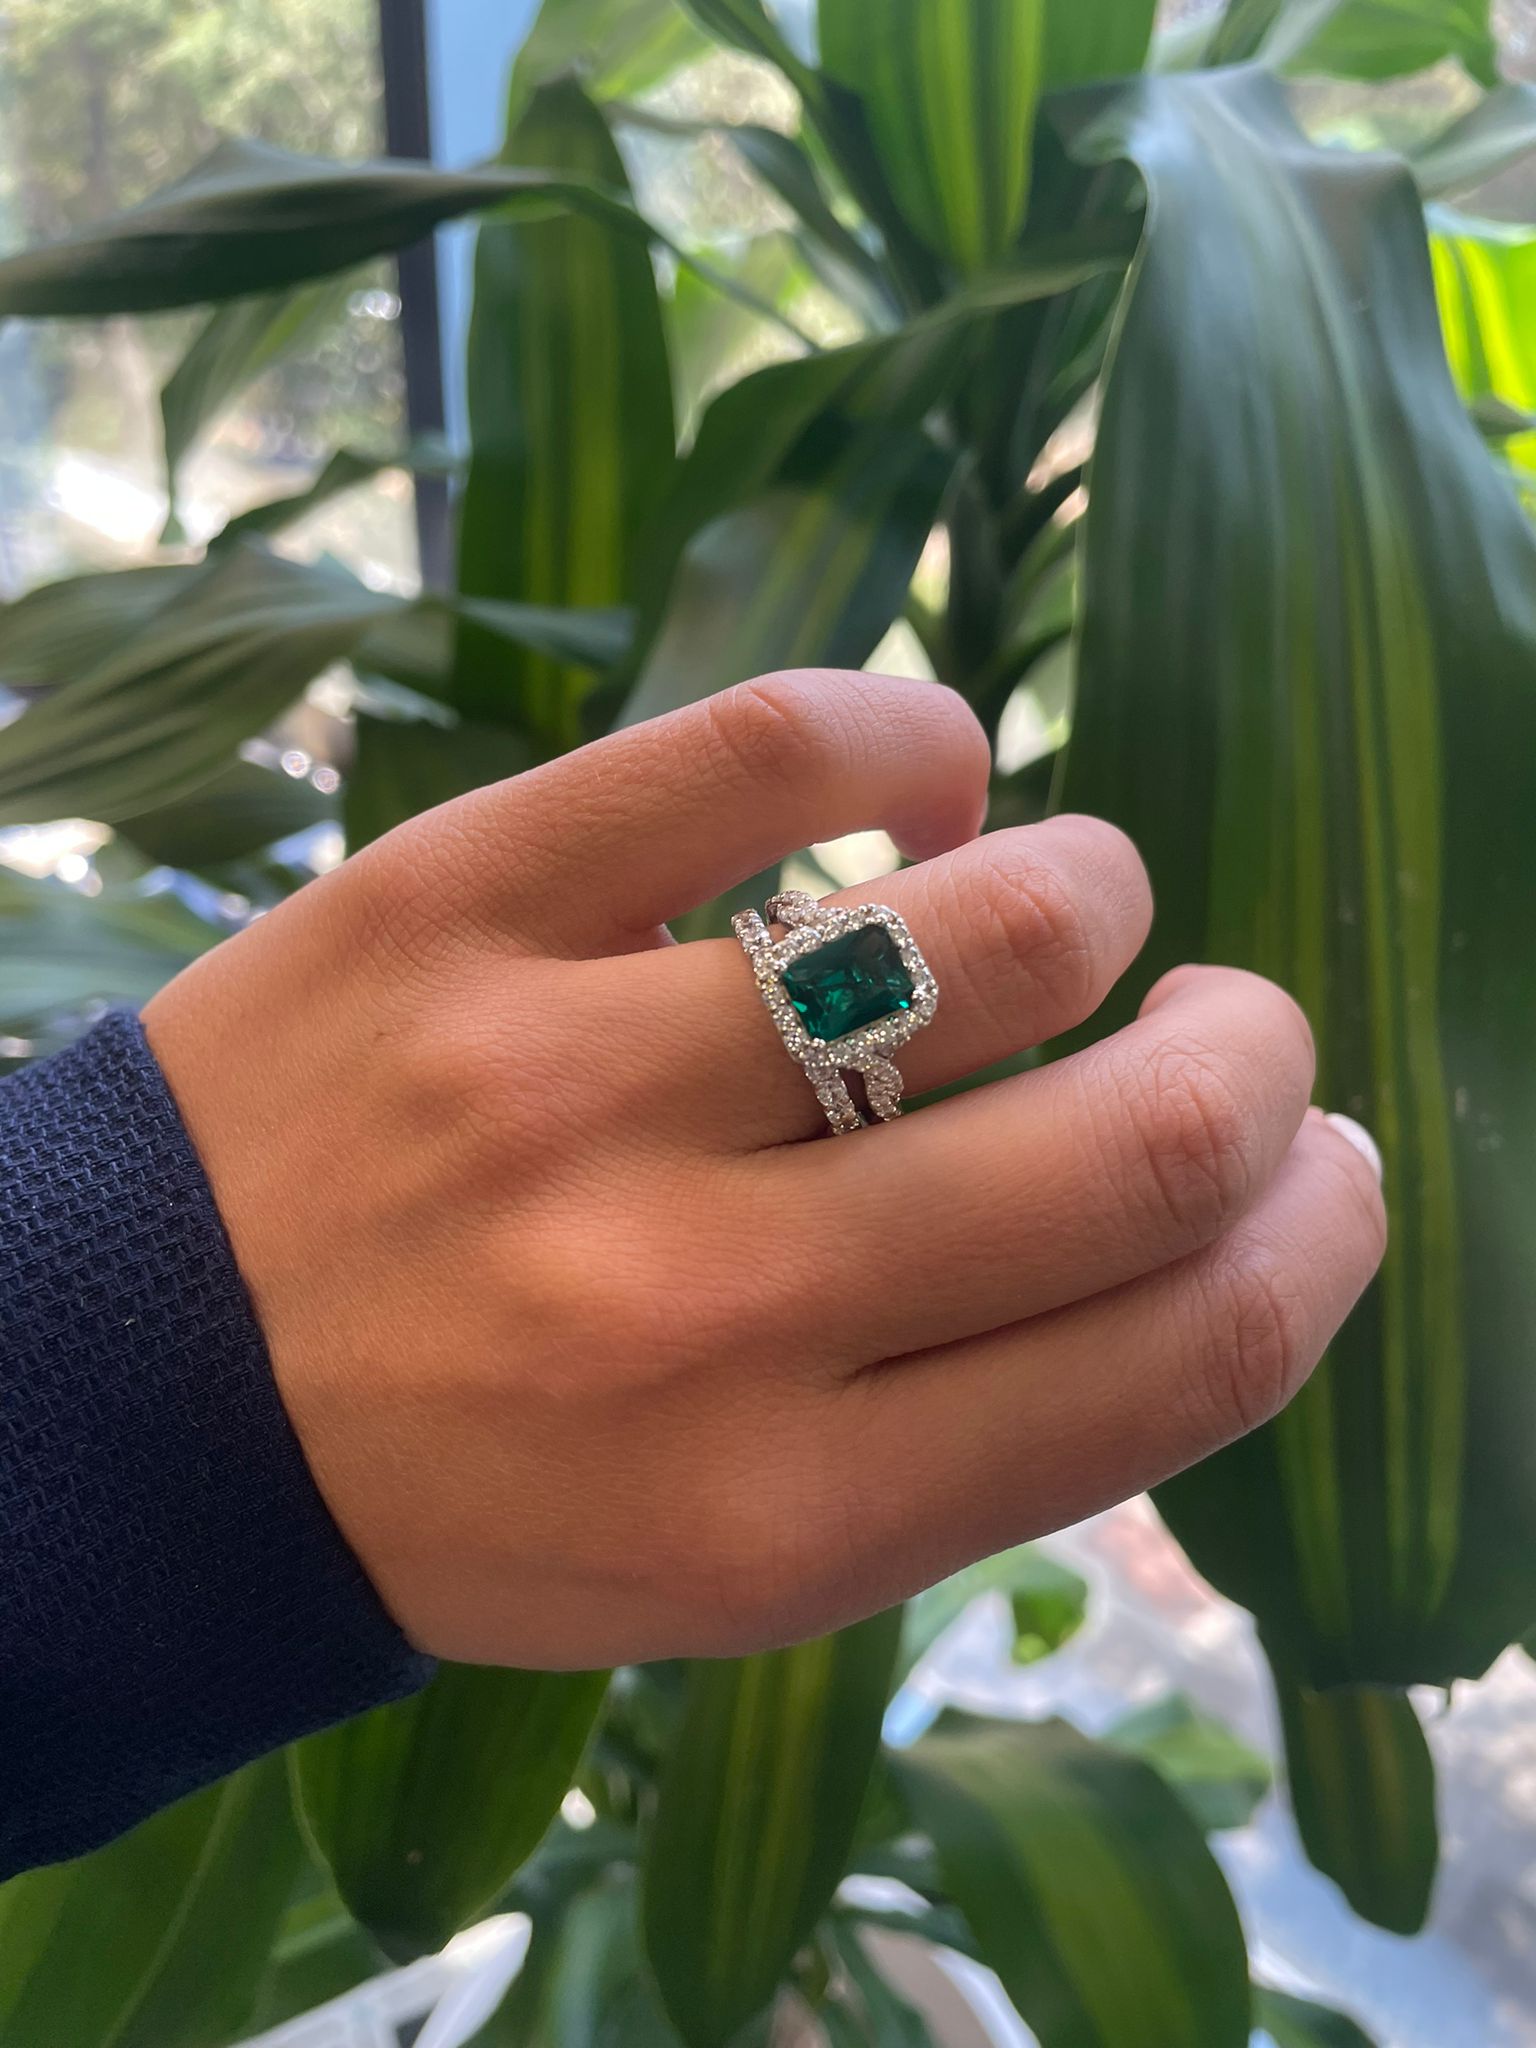 Rose Gold Emerald Cut Emerald Engagement Ring Vintage - MollyJewelryUS